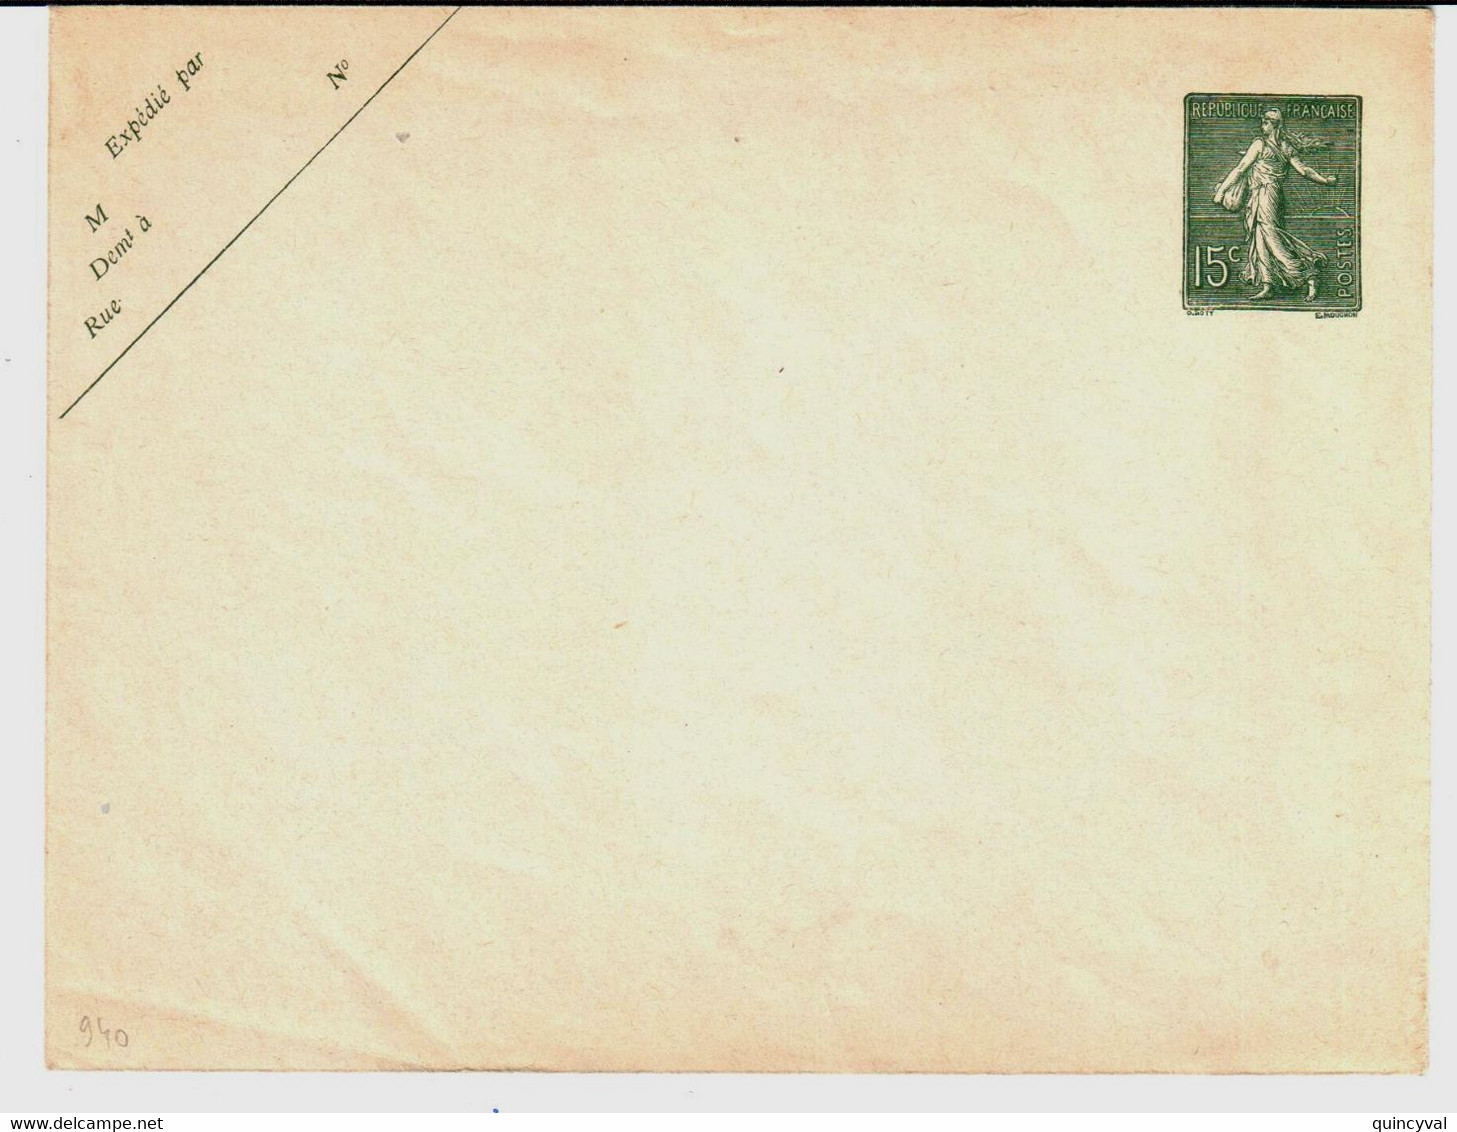 Enveloppe Entier Postal 15c Semeuse Lignée Vert Date 940 Yv 130-E9 Storch B19a Format 147x112 - Enveloppes Types Et TSC (avant 1995)